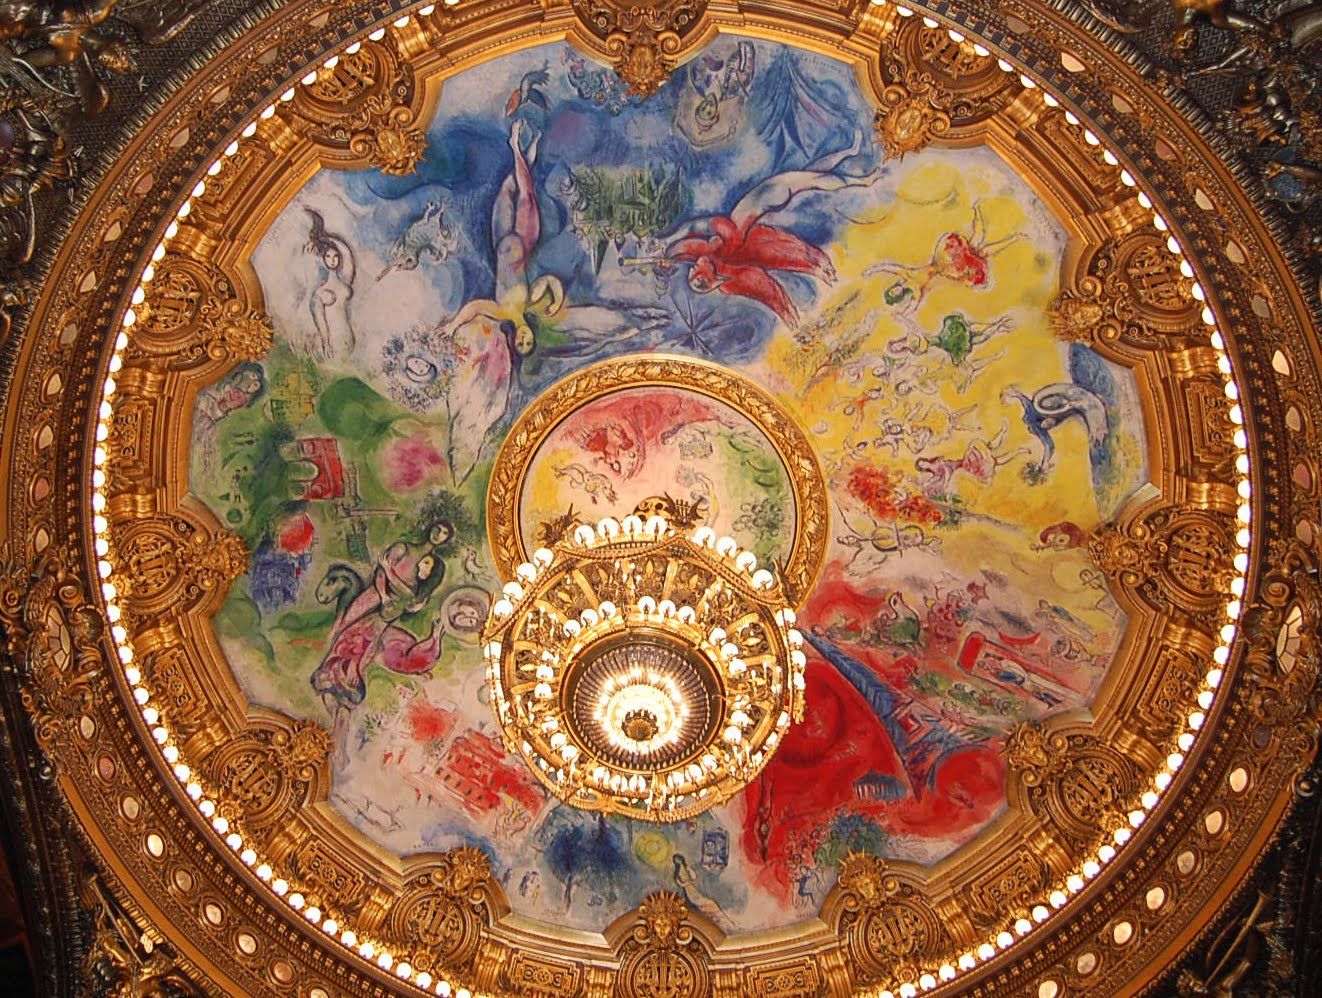 Ceiling of the Opera Garnier by Marc Chagall - Paris, France